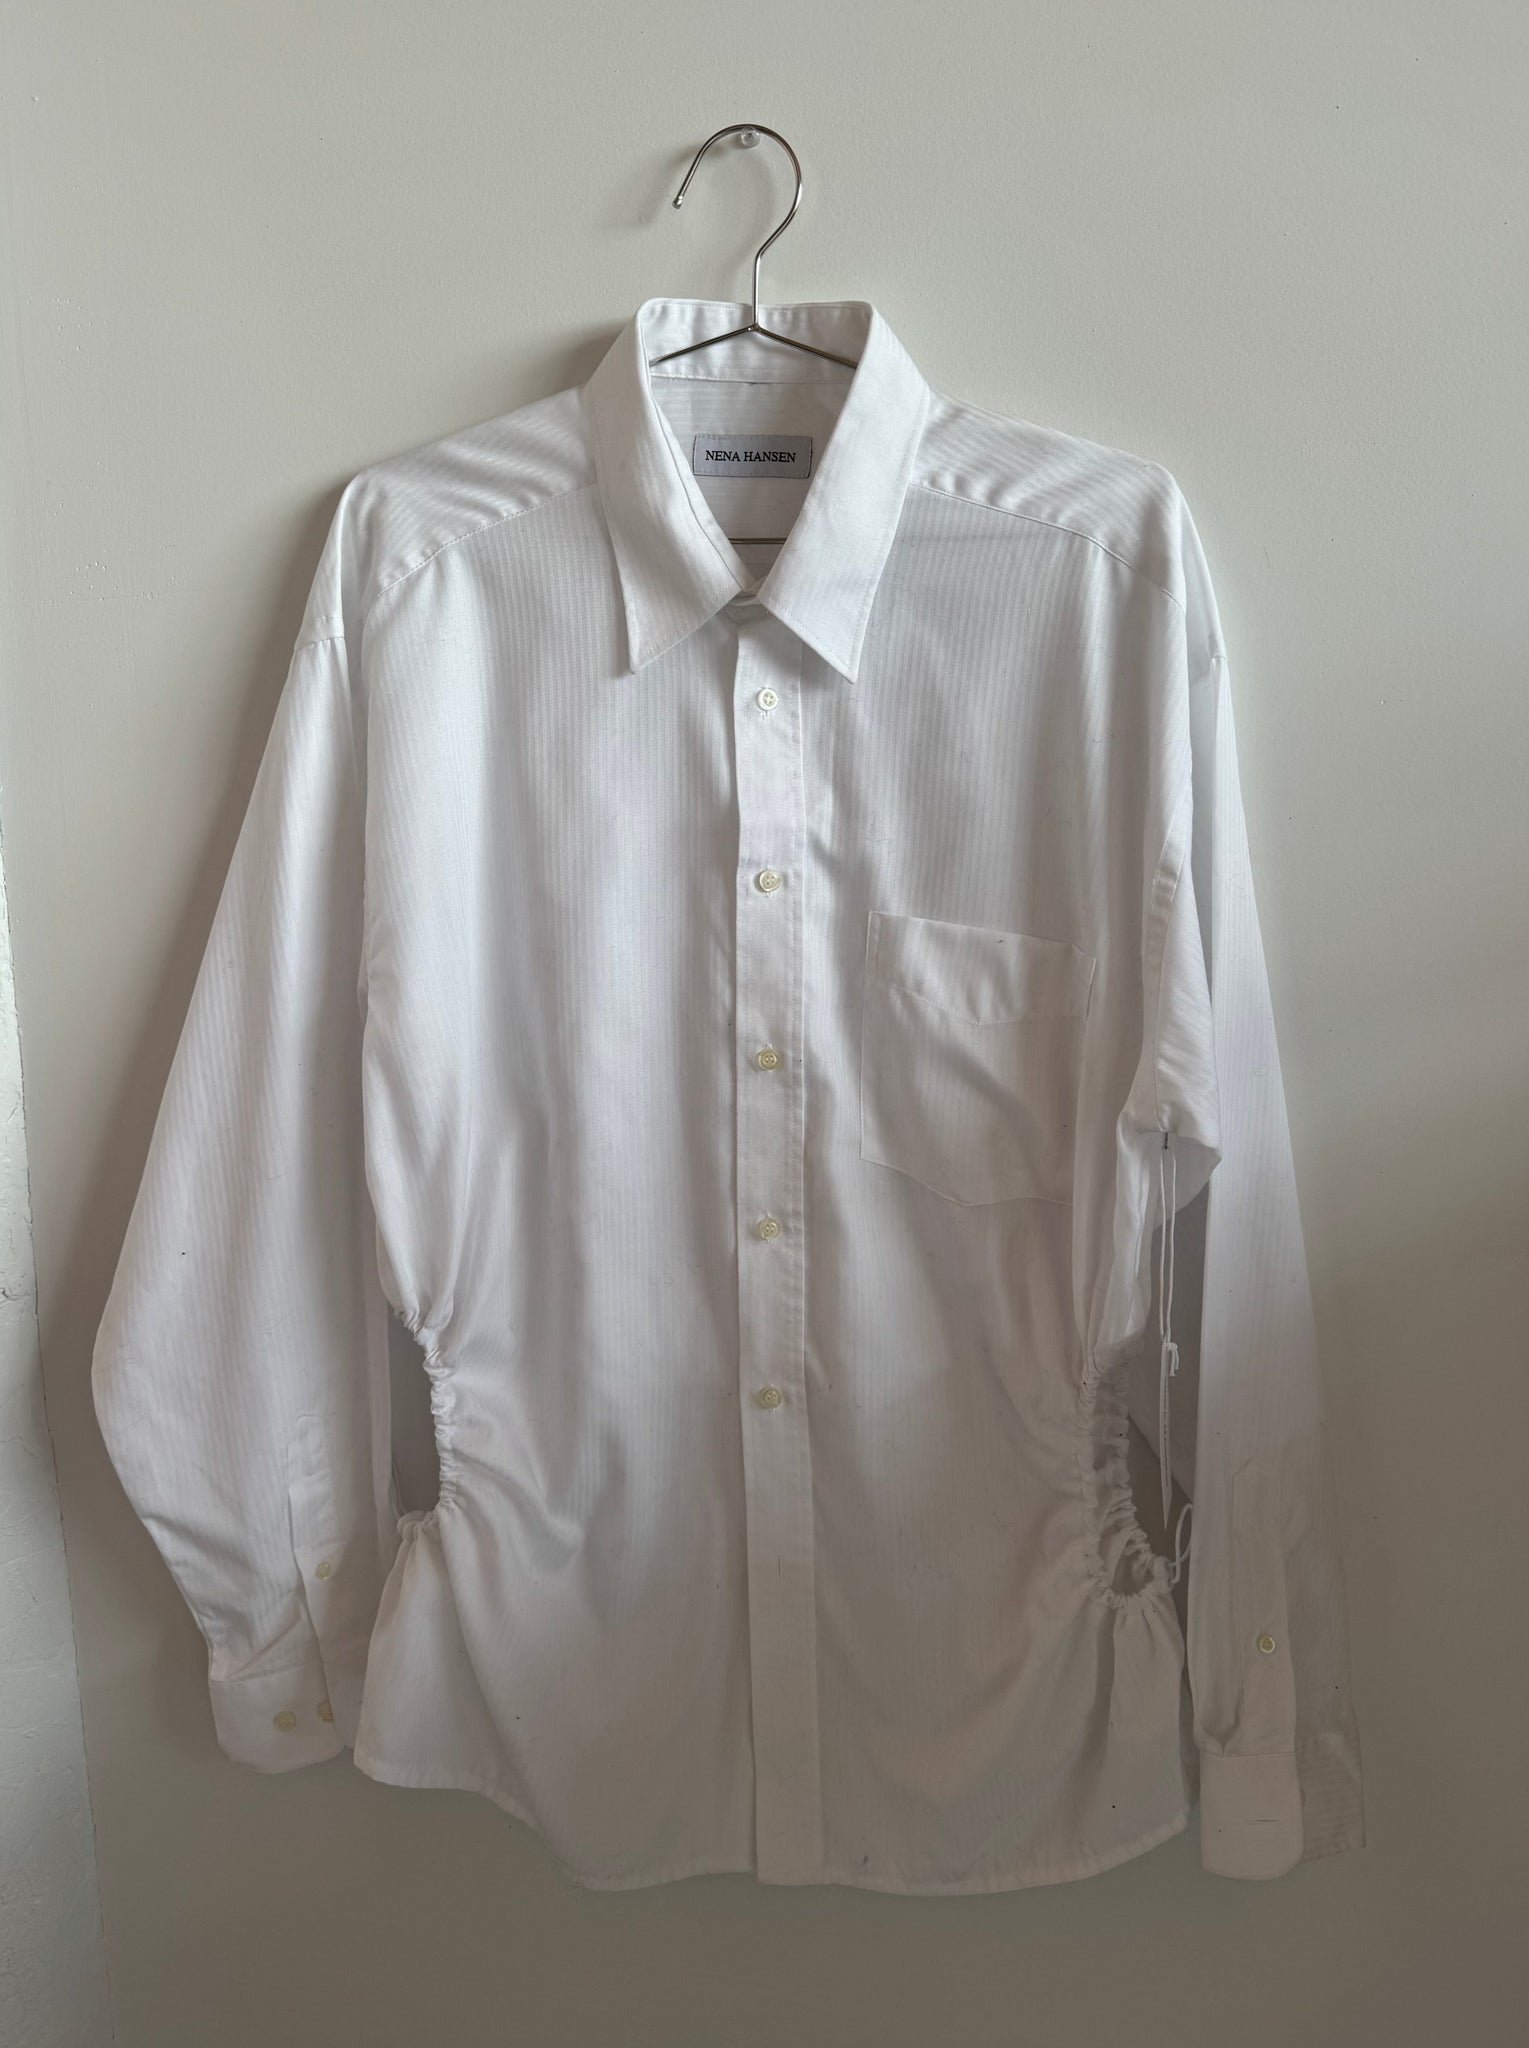 Nena Hansen - White Bungee Shirt (XL)